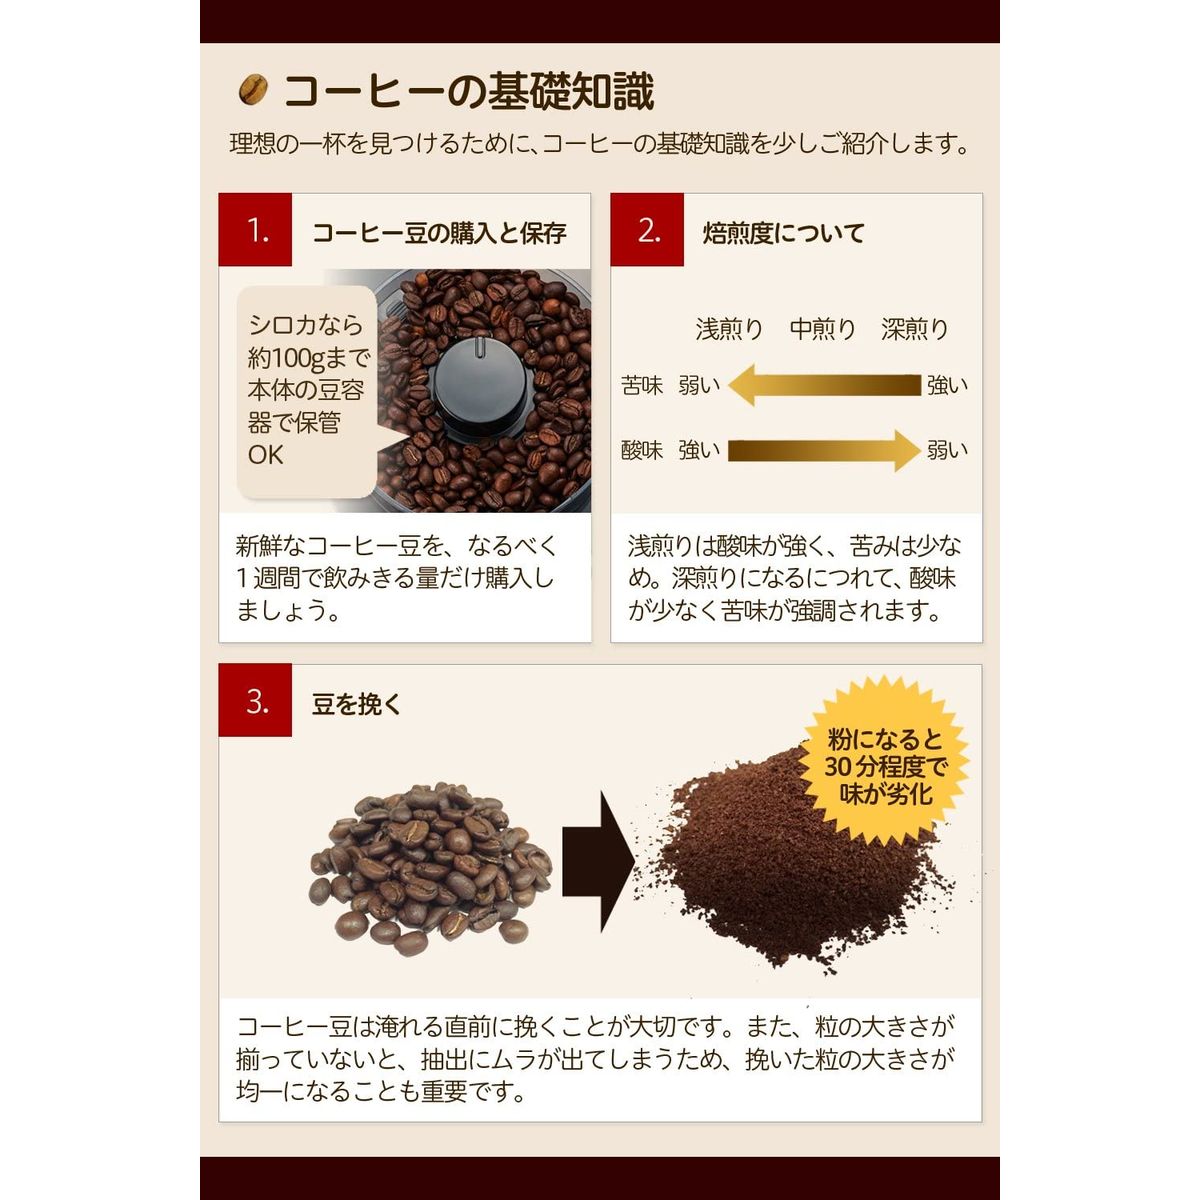 siroca コーン式全自動コーヒーメーカー シルバー